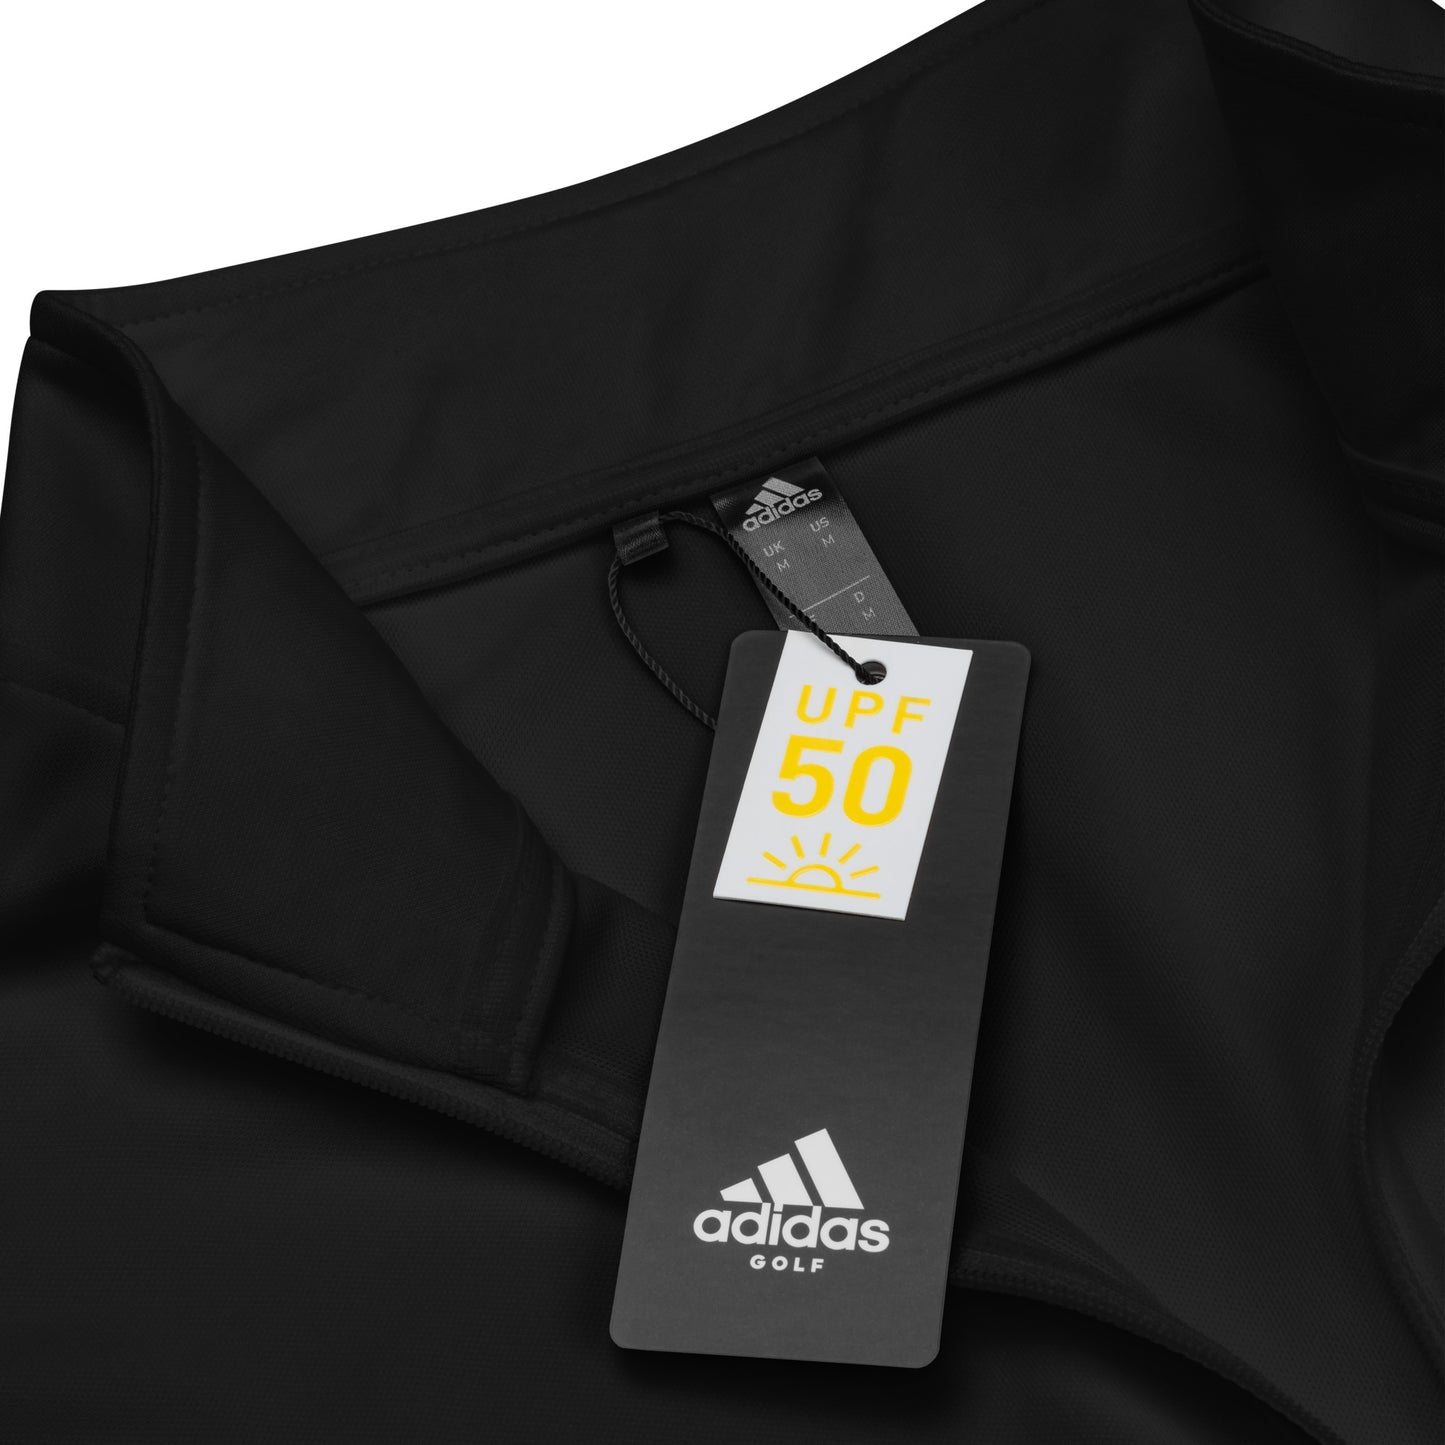 Adidas | Men's quarter zip pullover - Lee Silsby